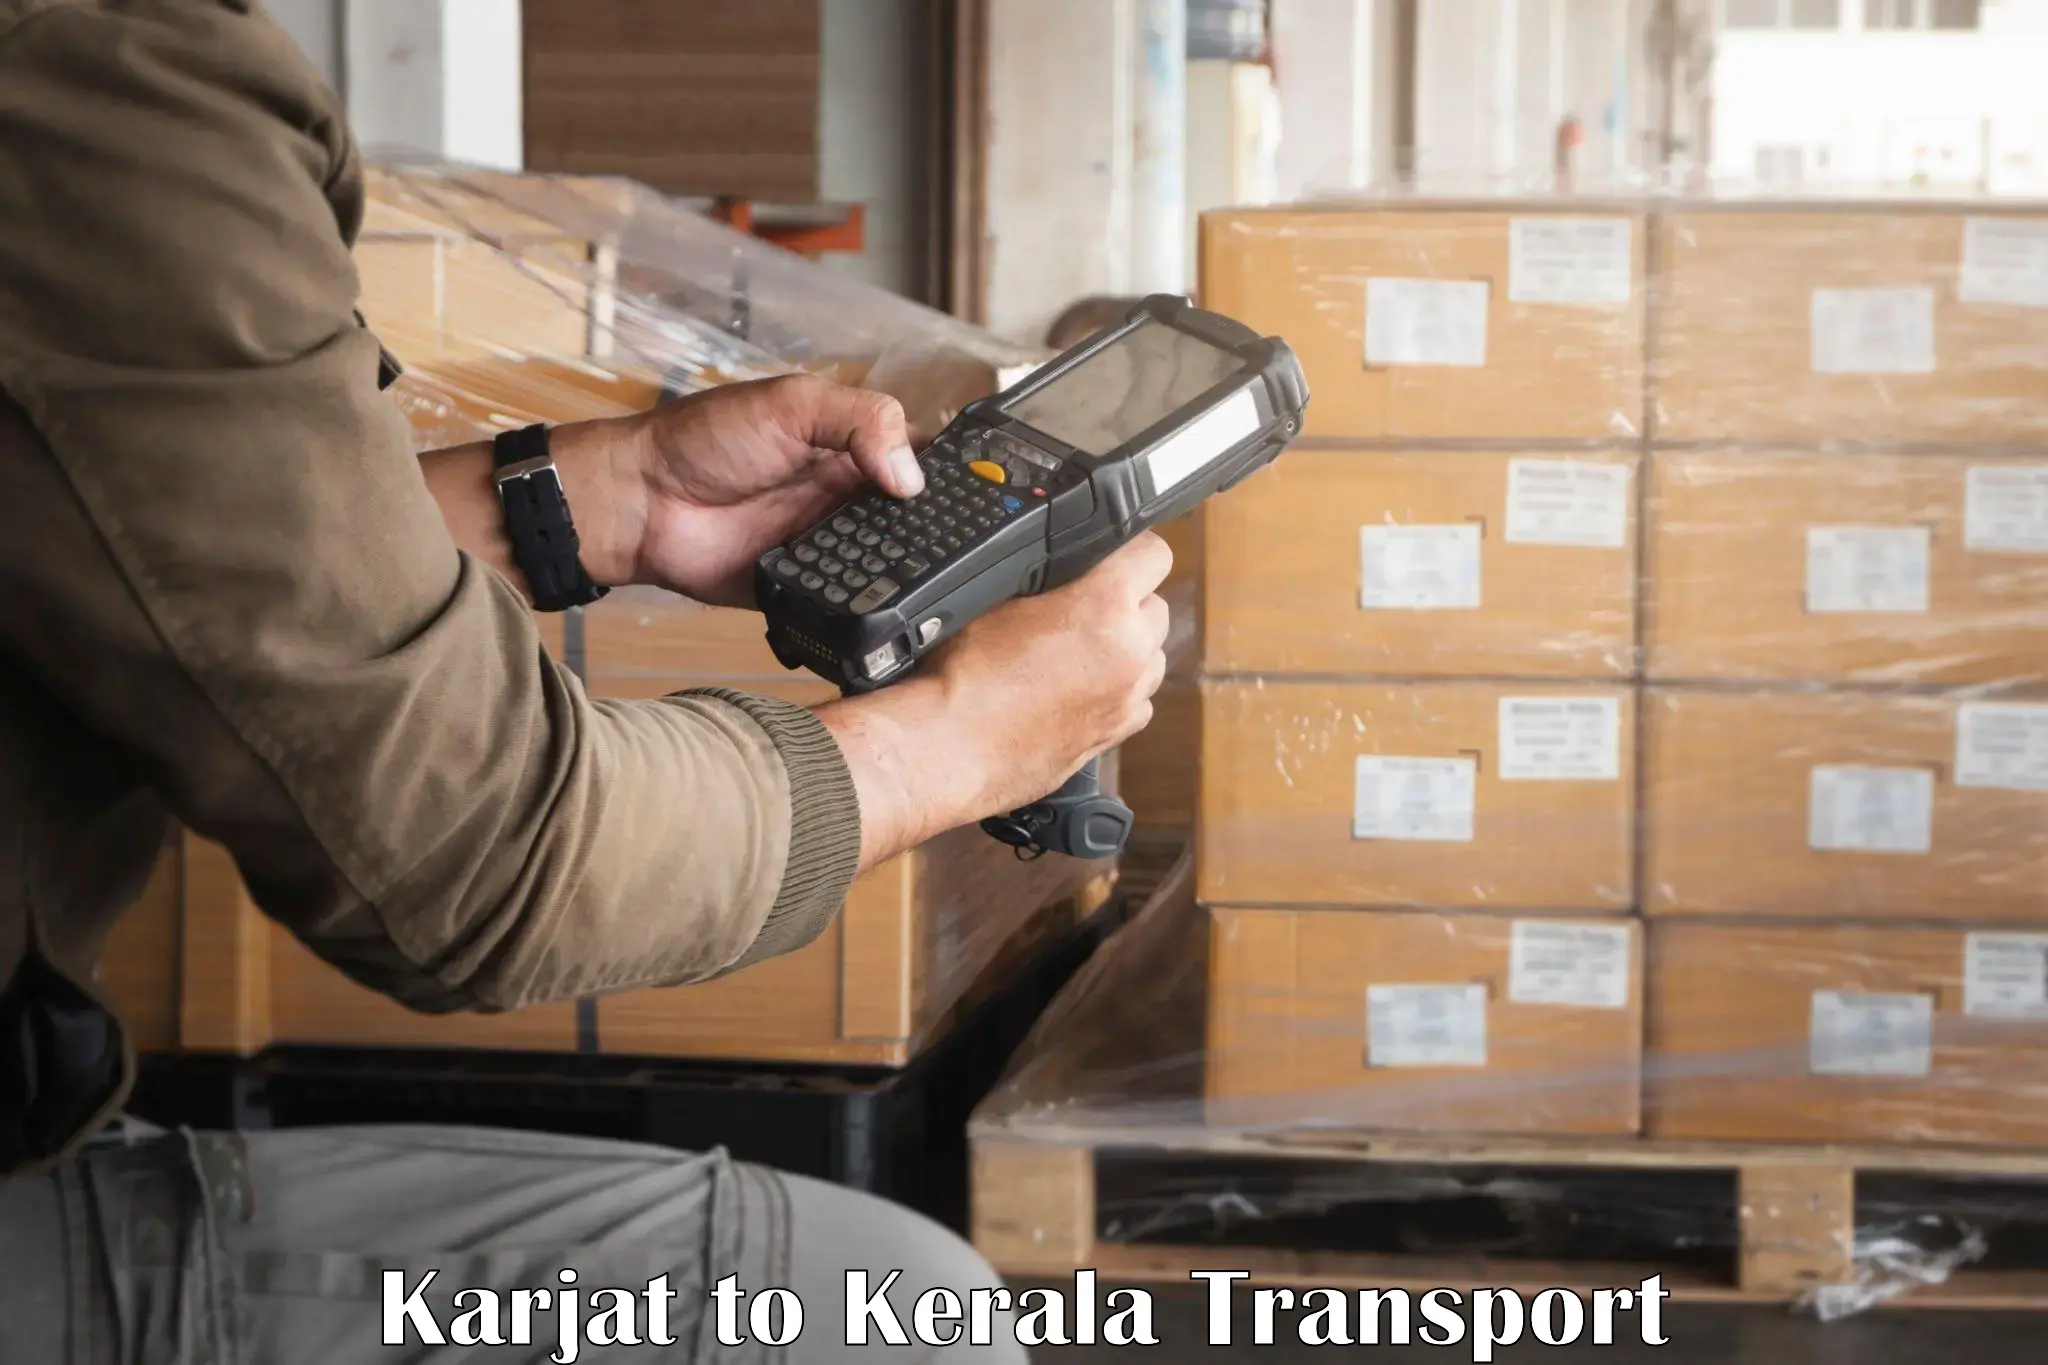 Daily transport service Karjat to Malappuram